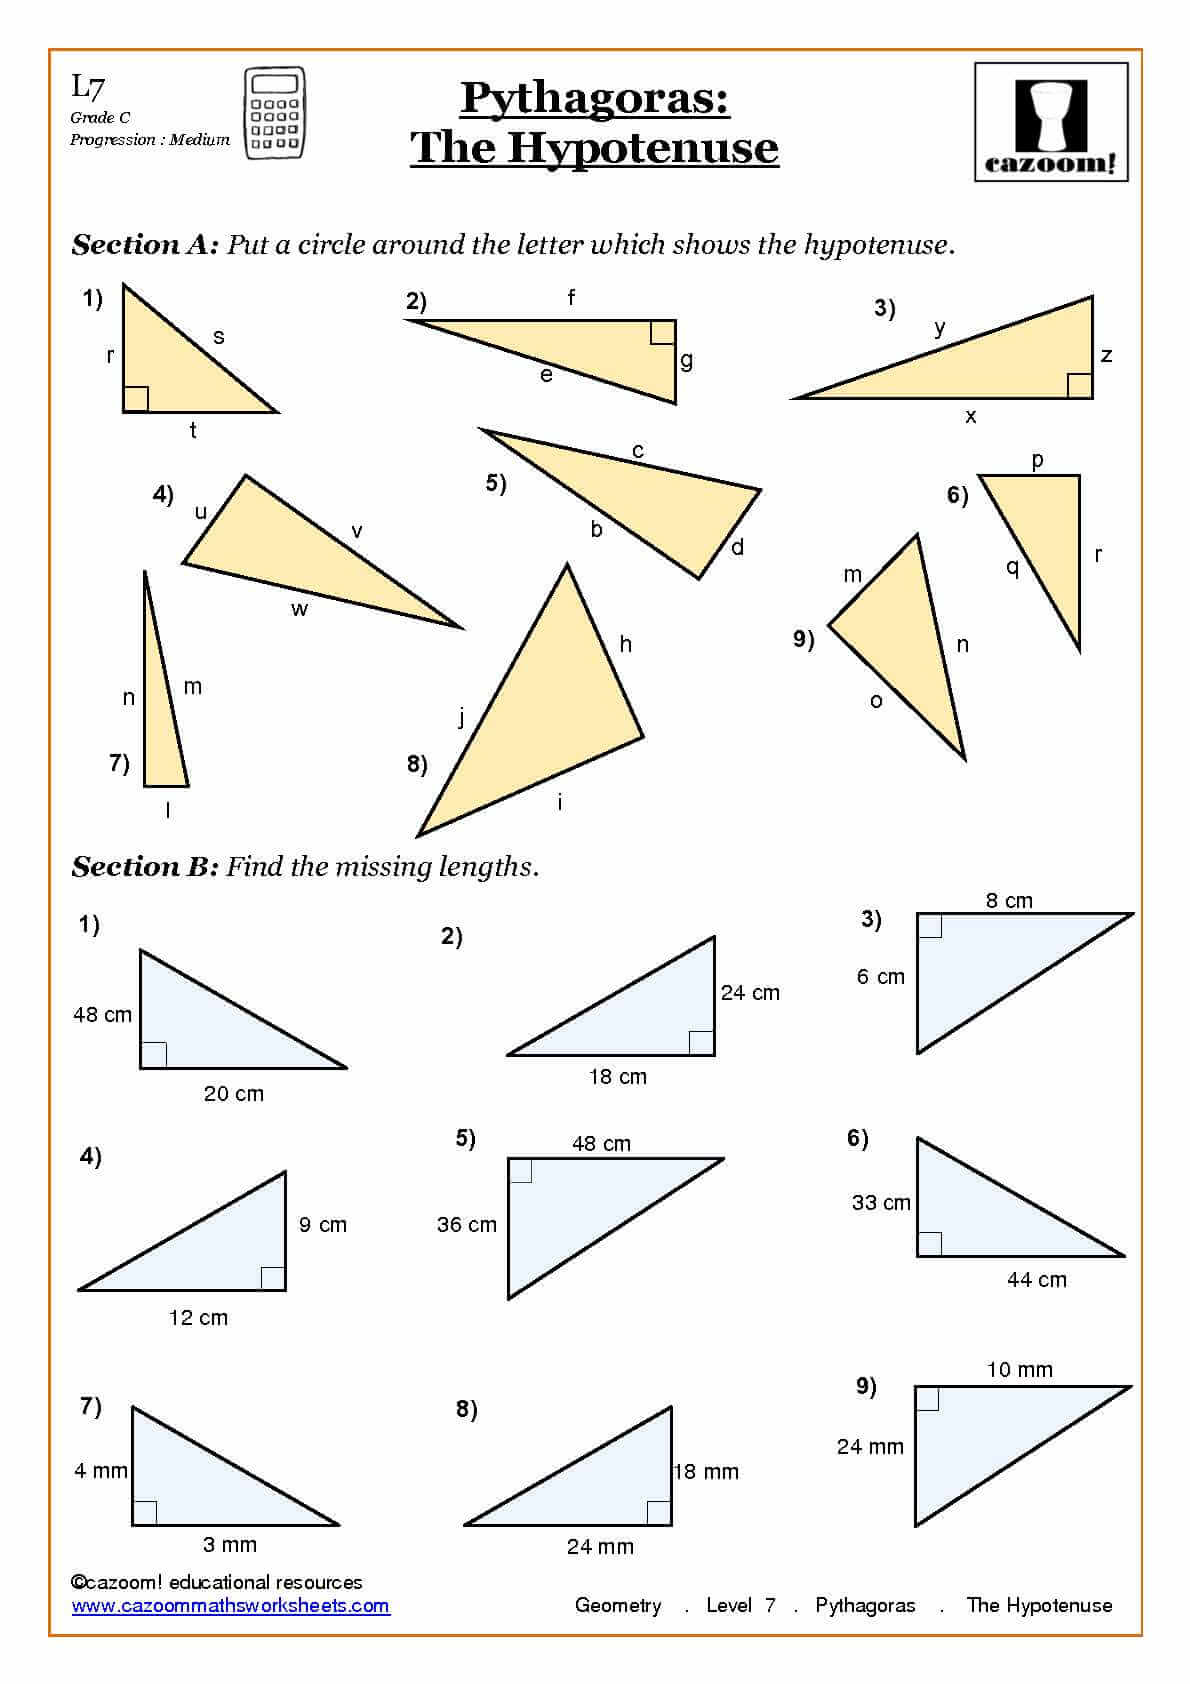 Pythagoras The Hypotenuse - Geometry Worksheet